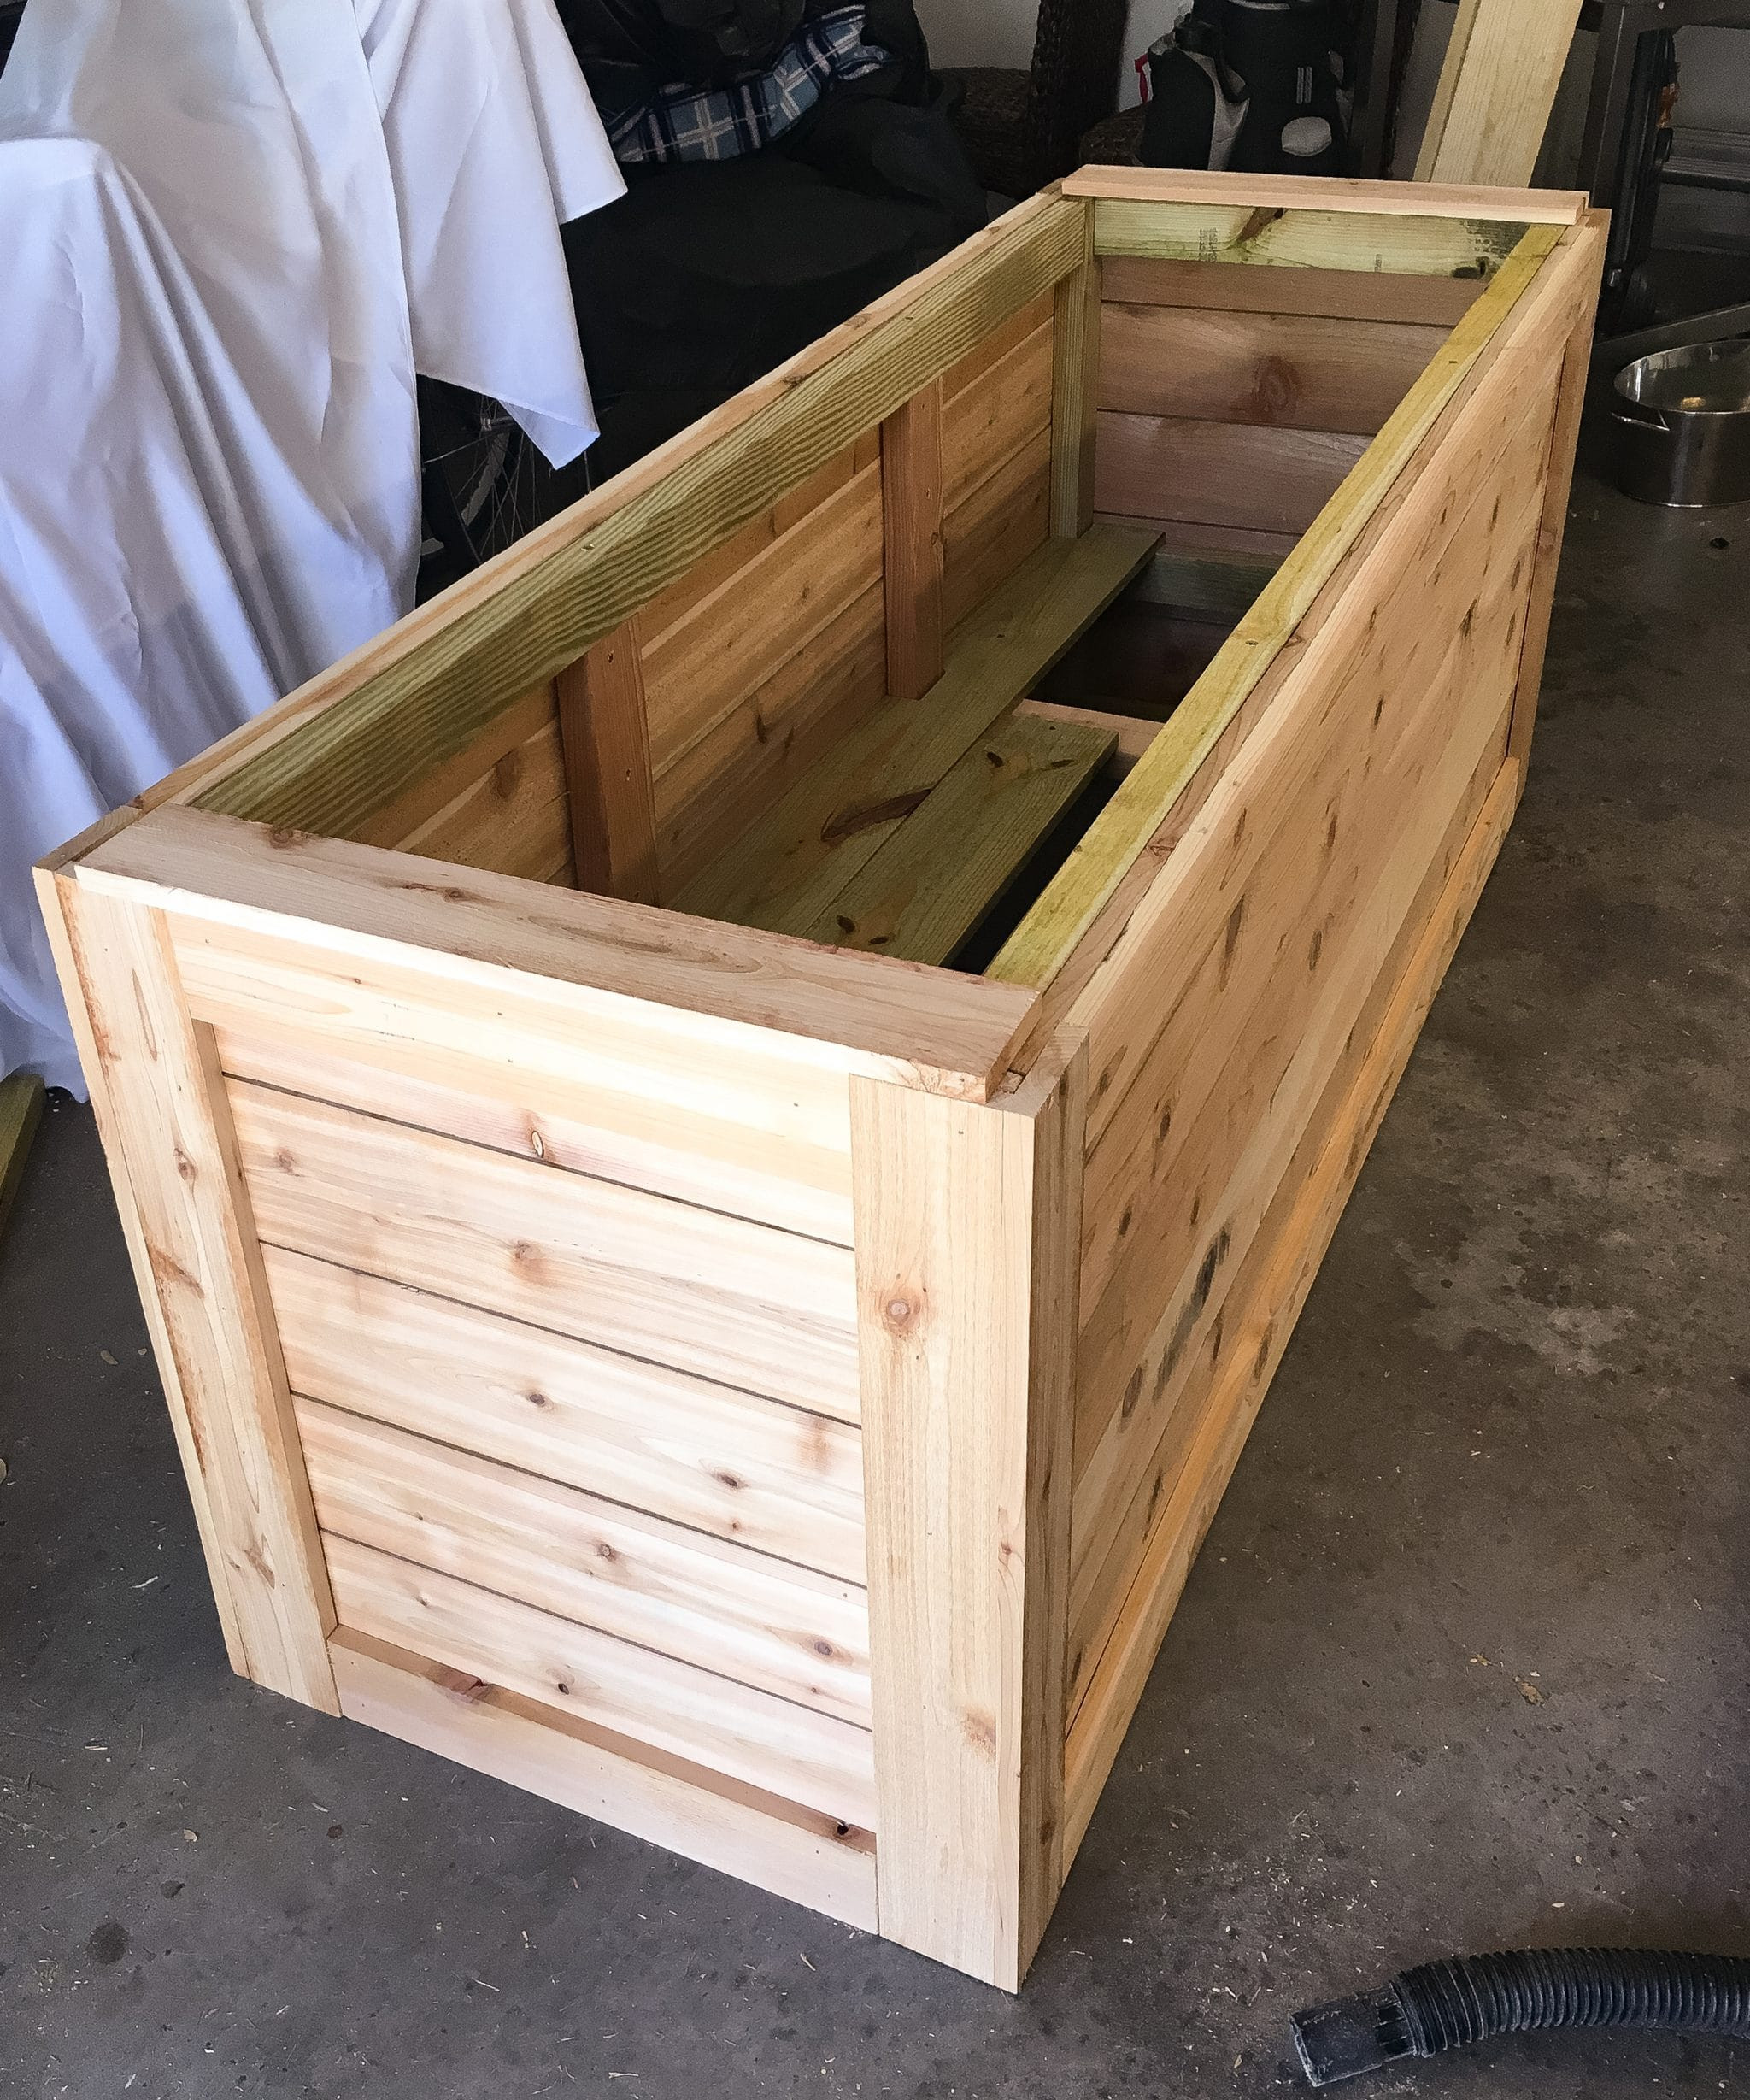 DIY Wooden Planter Boxes
 BACKYARD DIY SERIES PART IIII Cedar Wood Planter Box